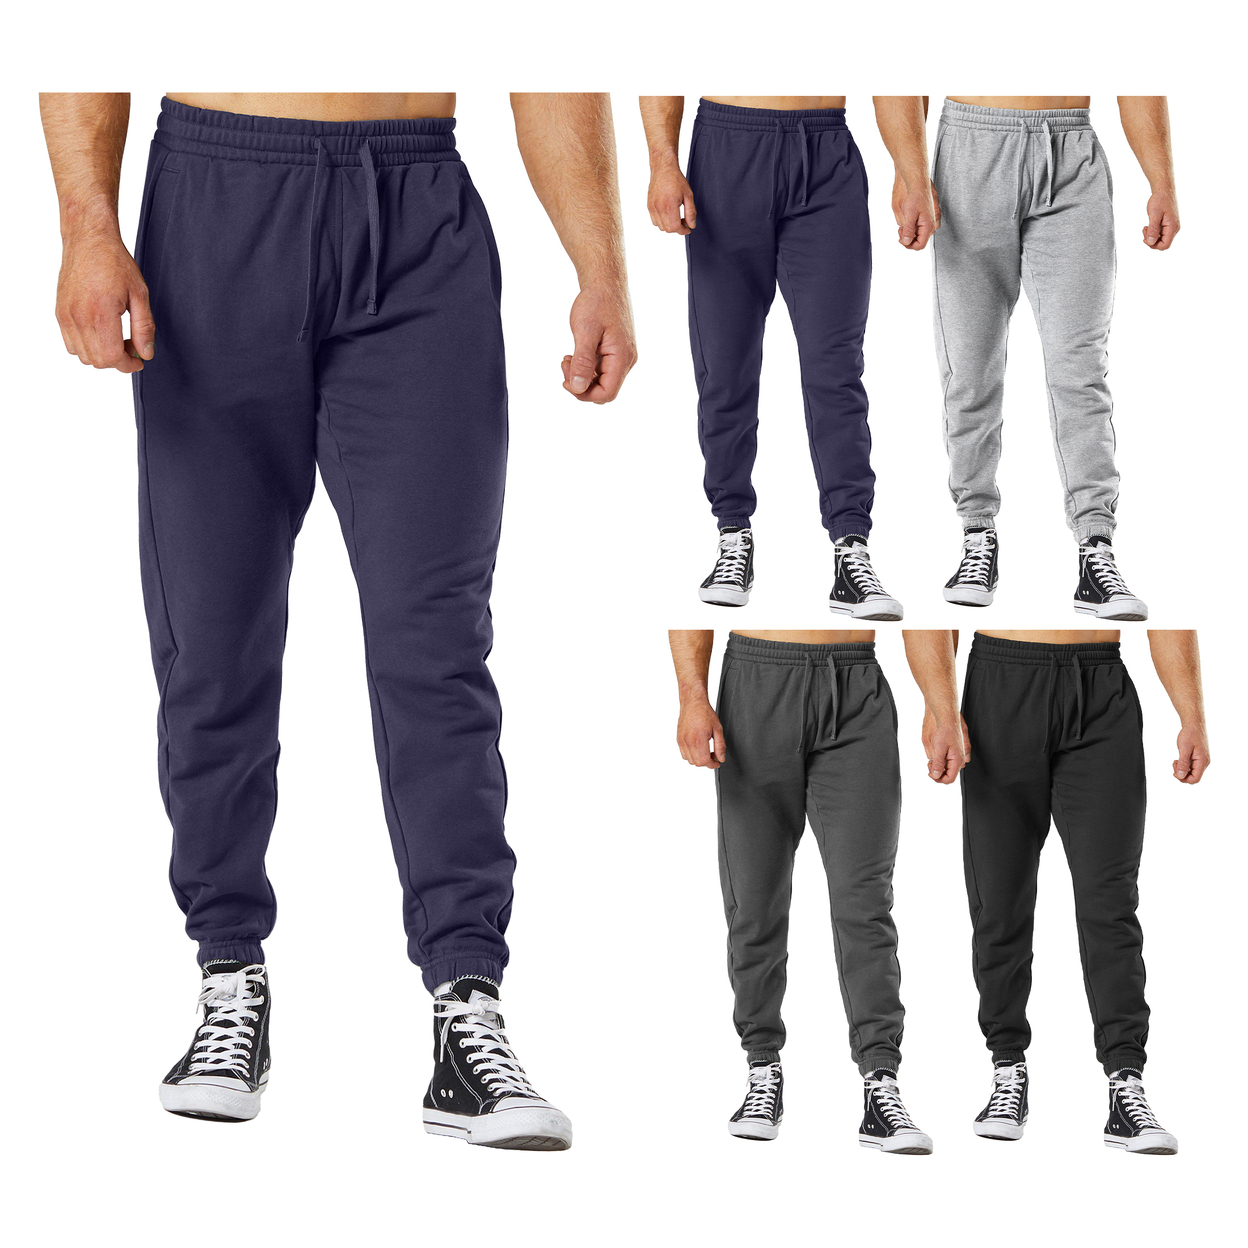 Men's Ultra-Soft Cozy Winter Warm Casual Fleece Lined Sweatpants Jogger - Grey, Small